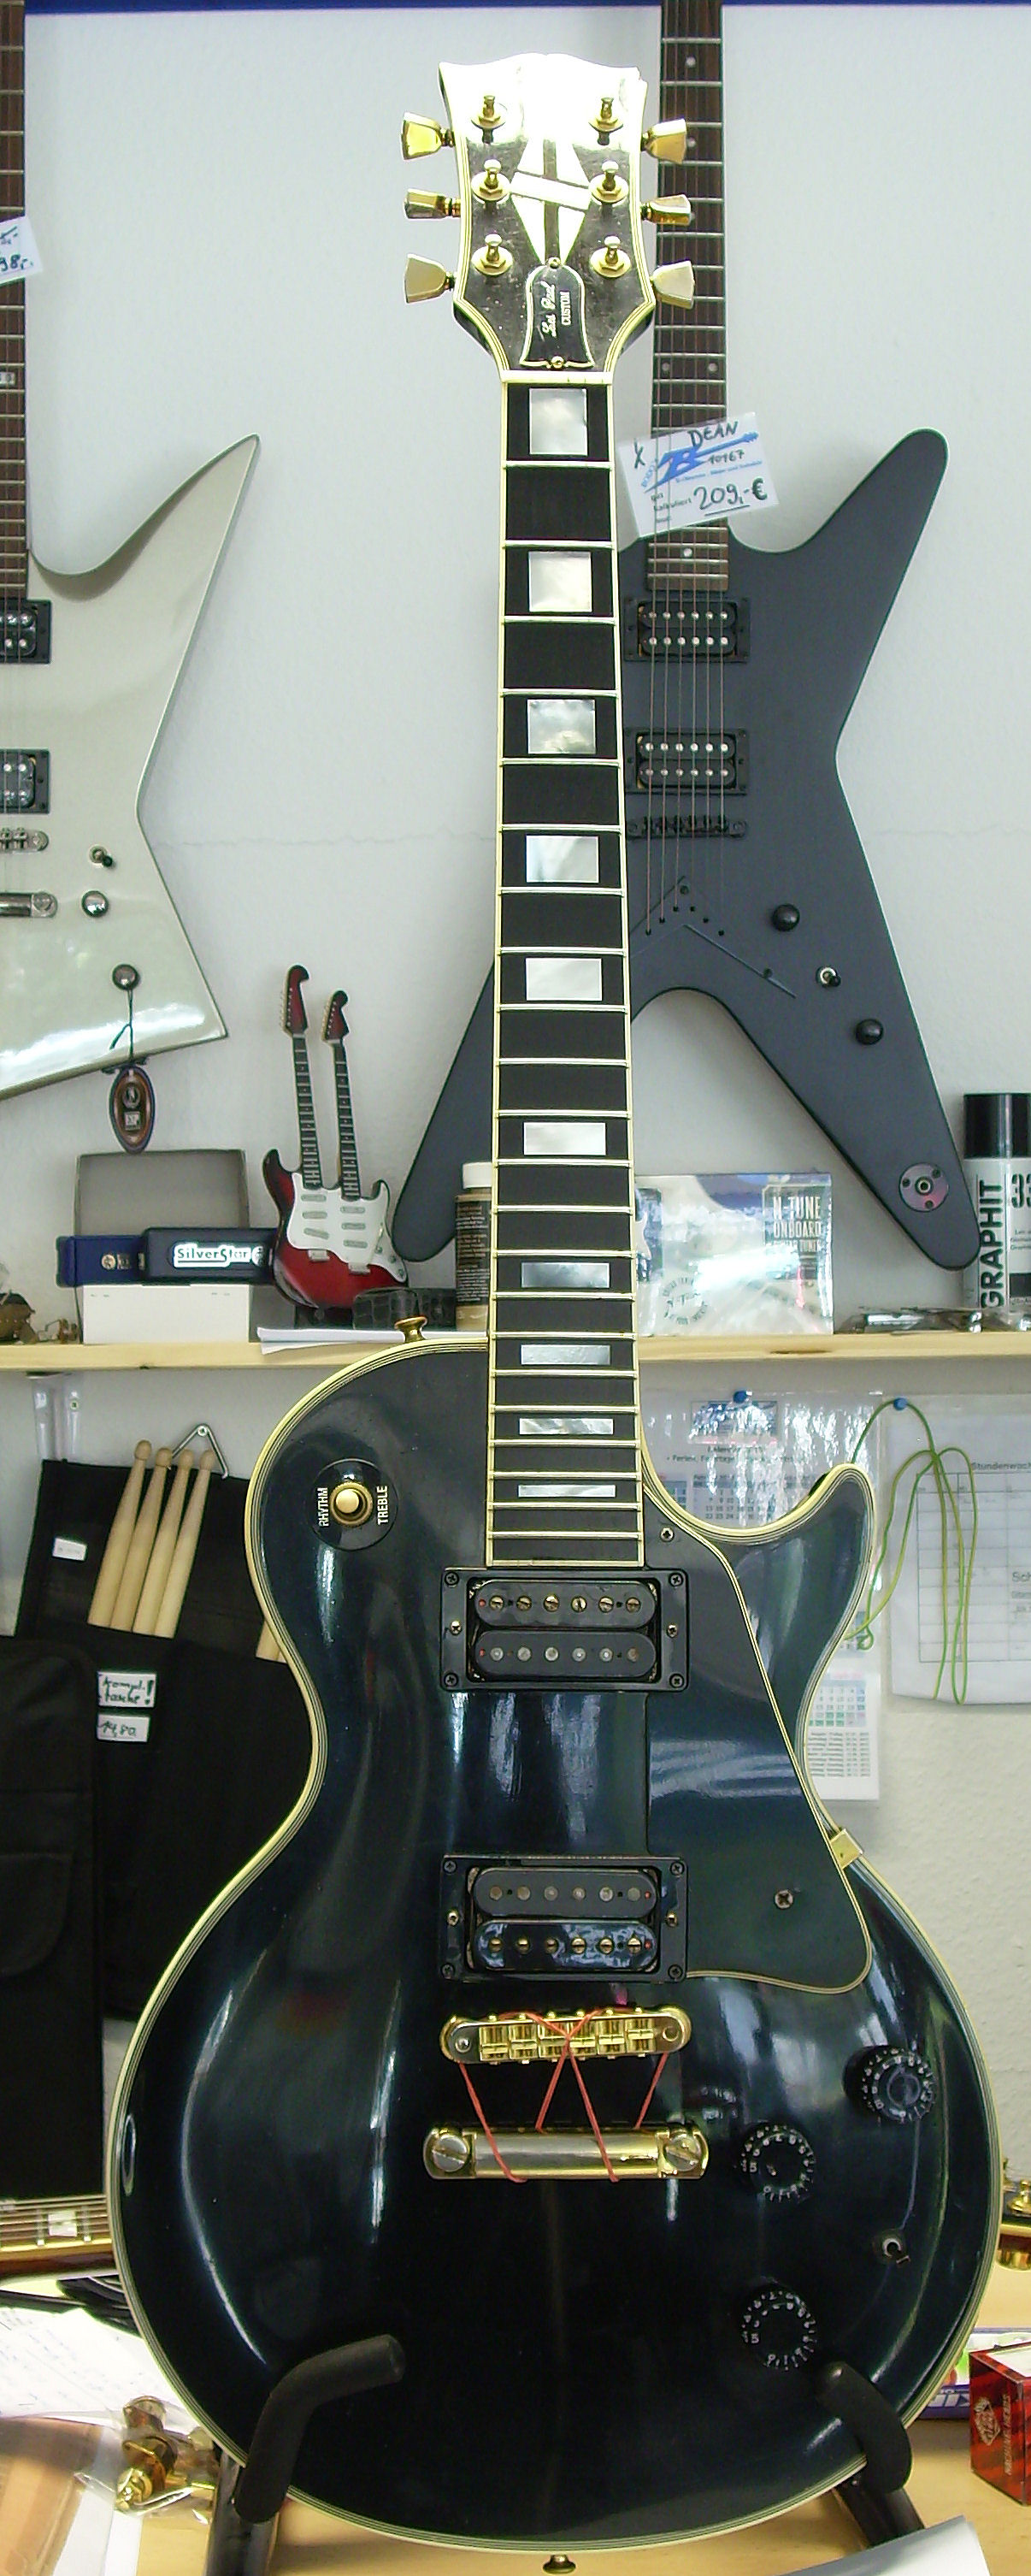 Gibson LP Custom